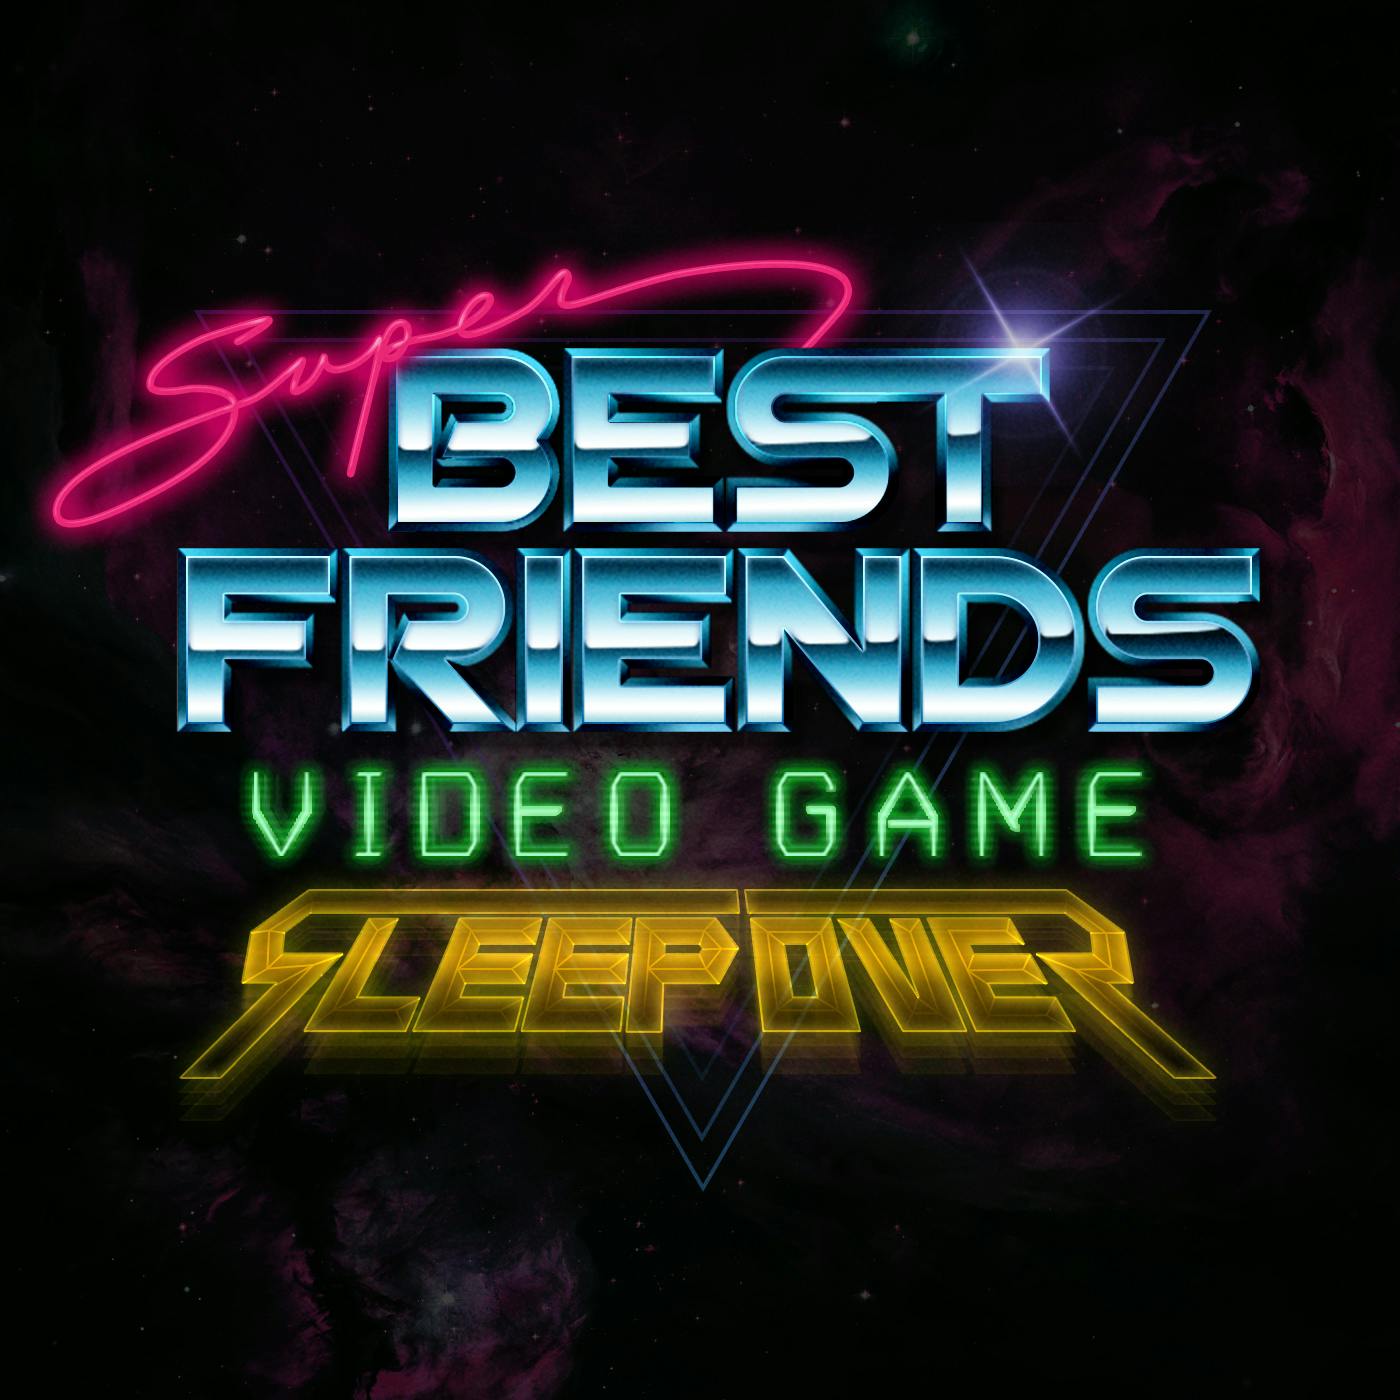 Super Best Friends Video Game Sleepover - Episode 28